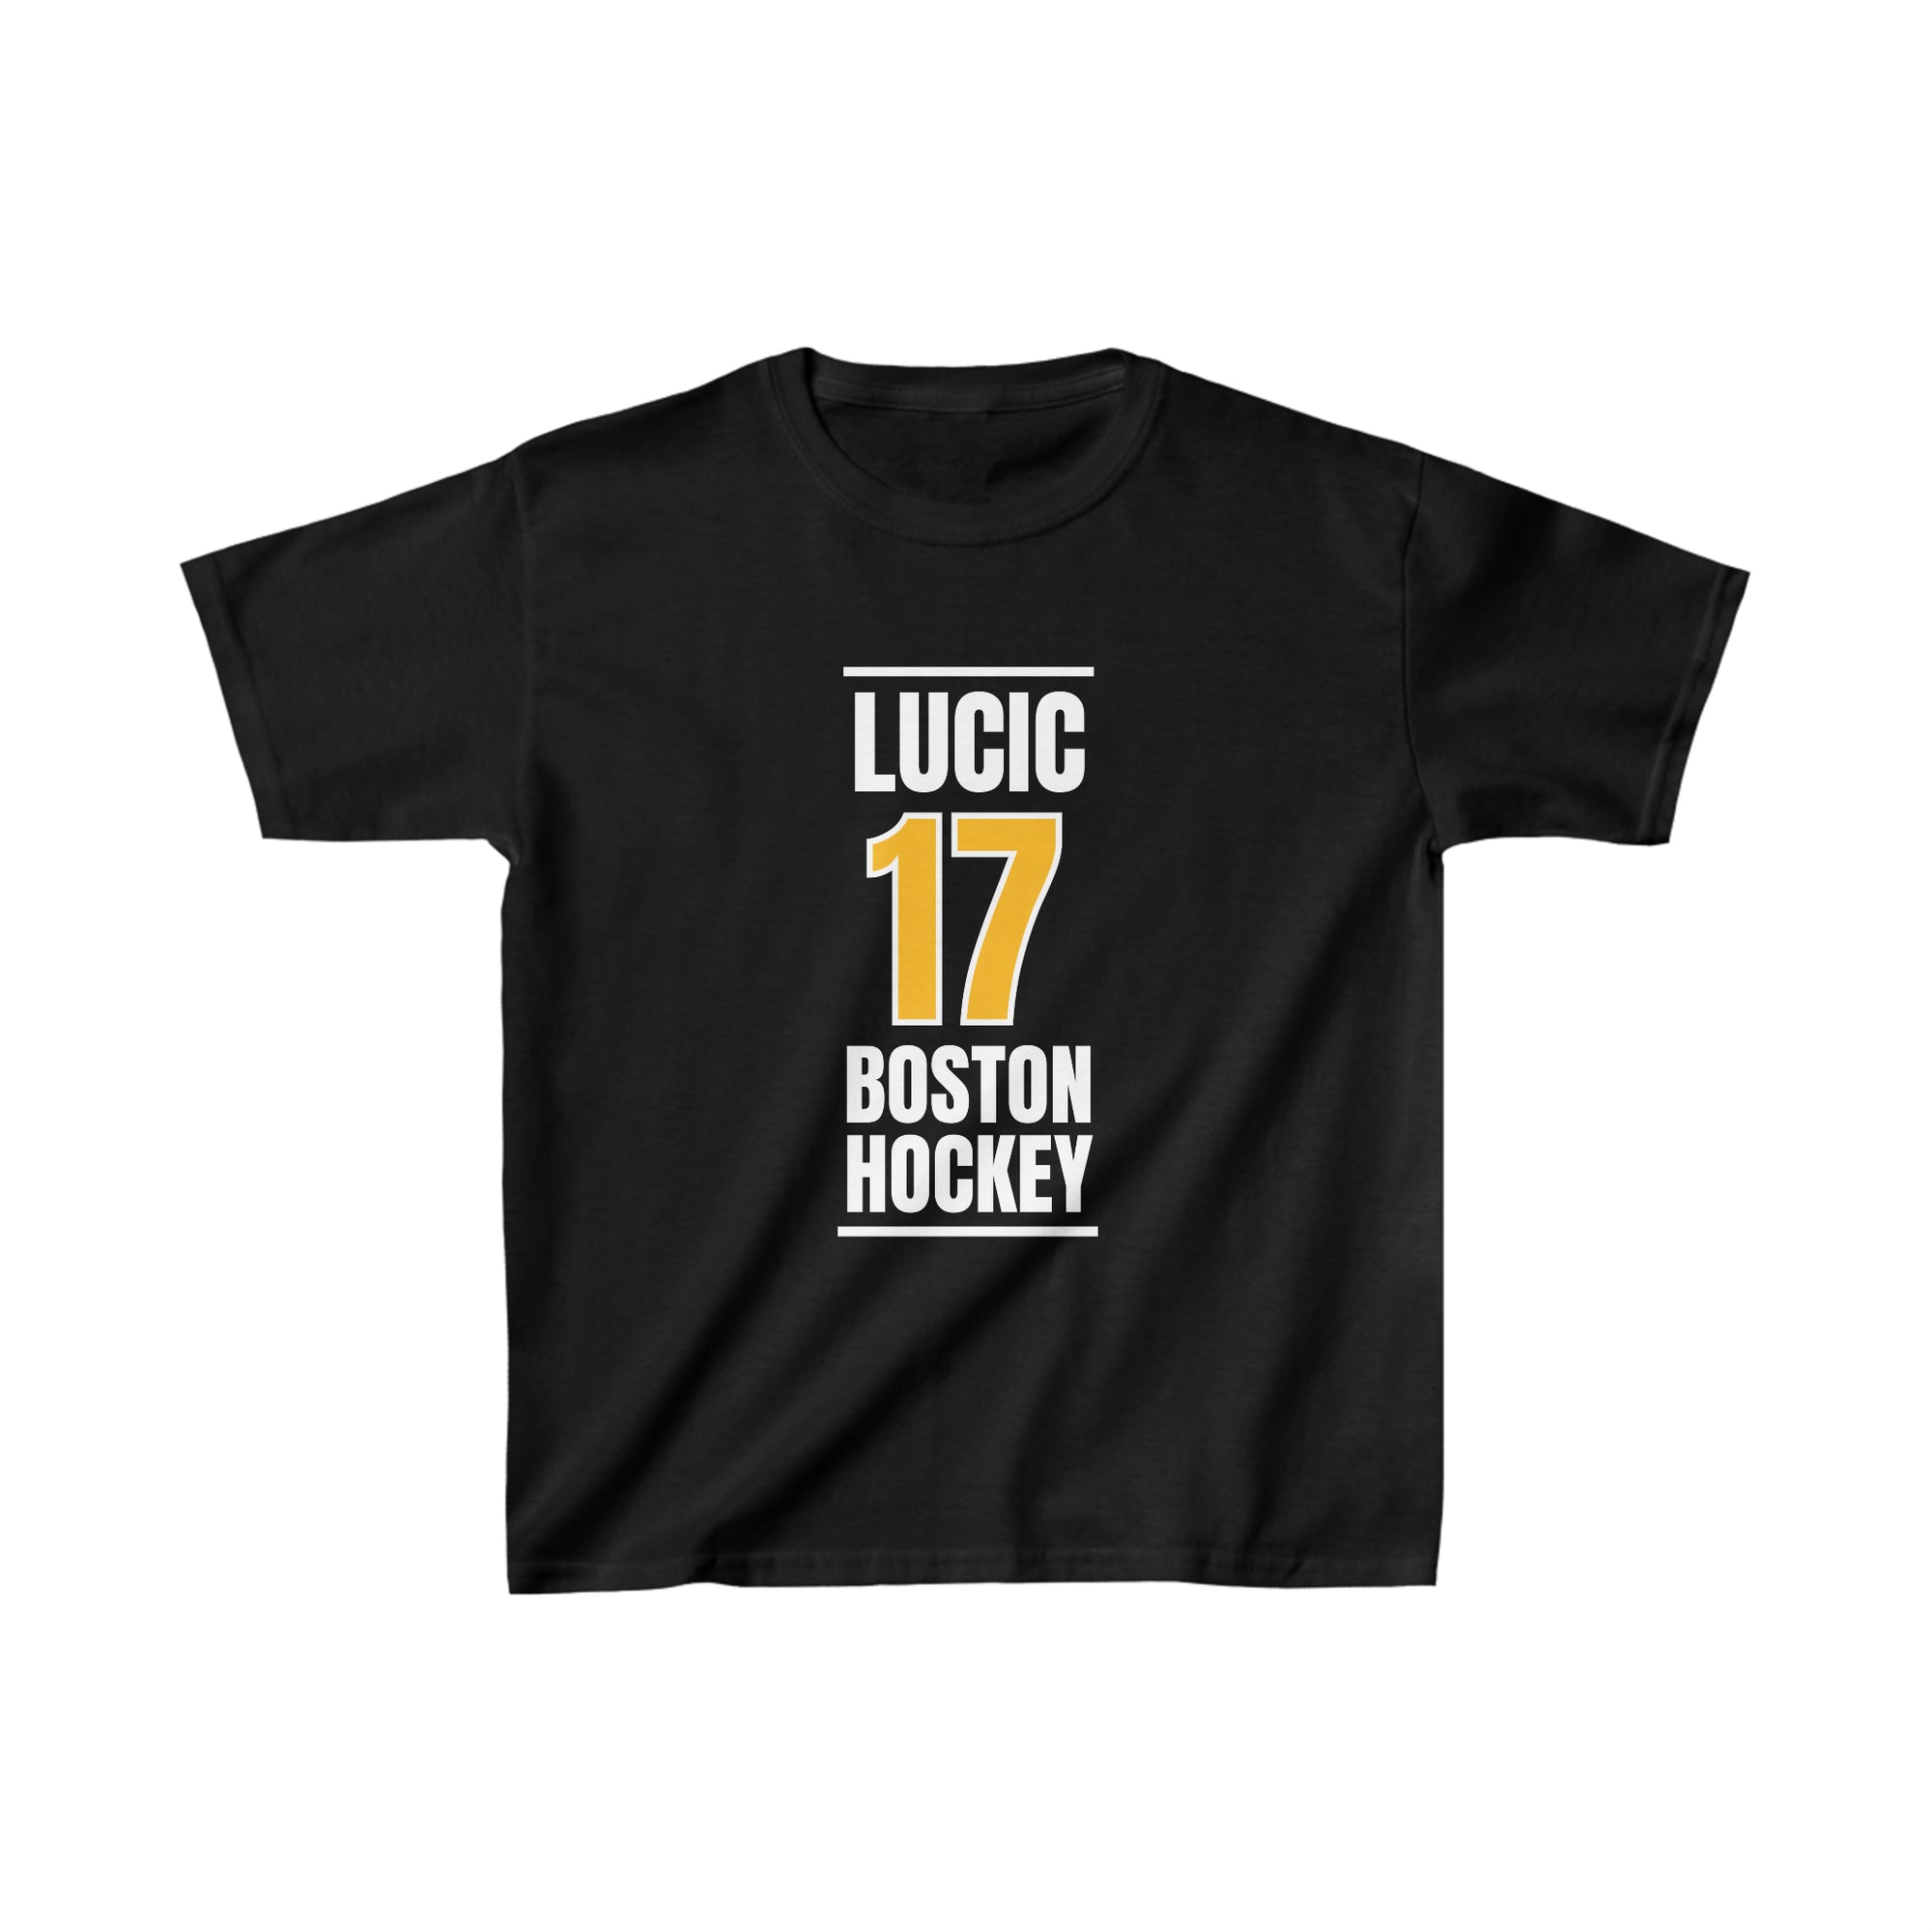 Lucic 17 Boston Hockey Gold Vertical Design Kids Tee